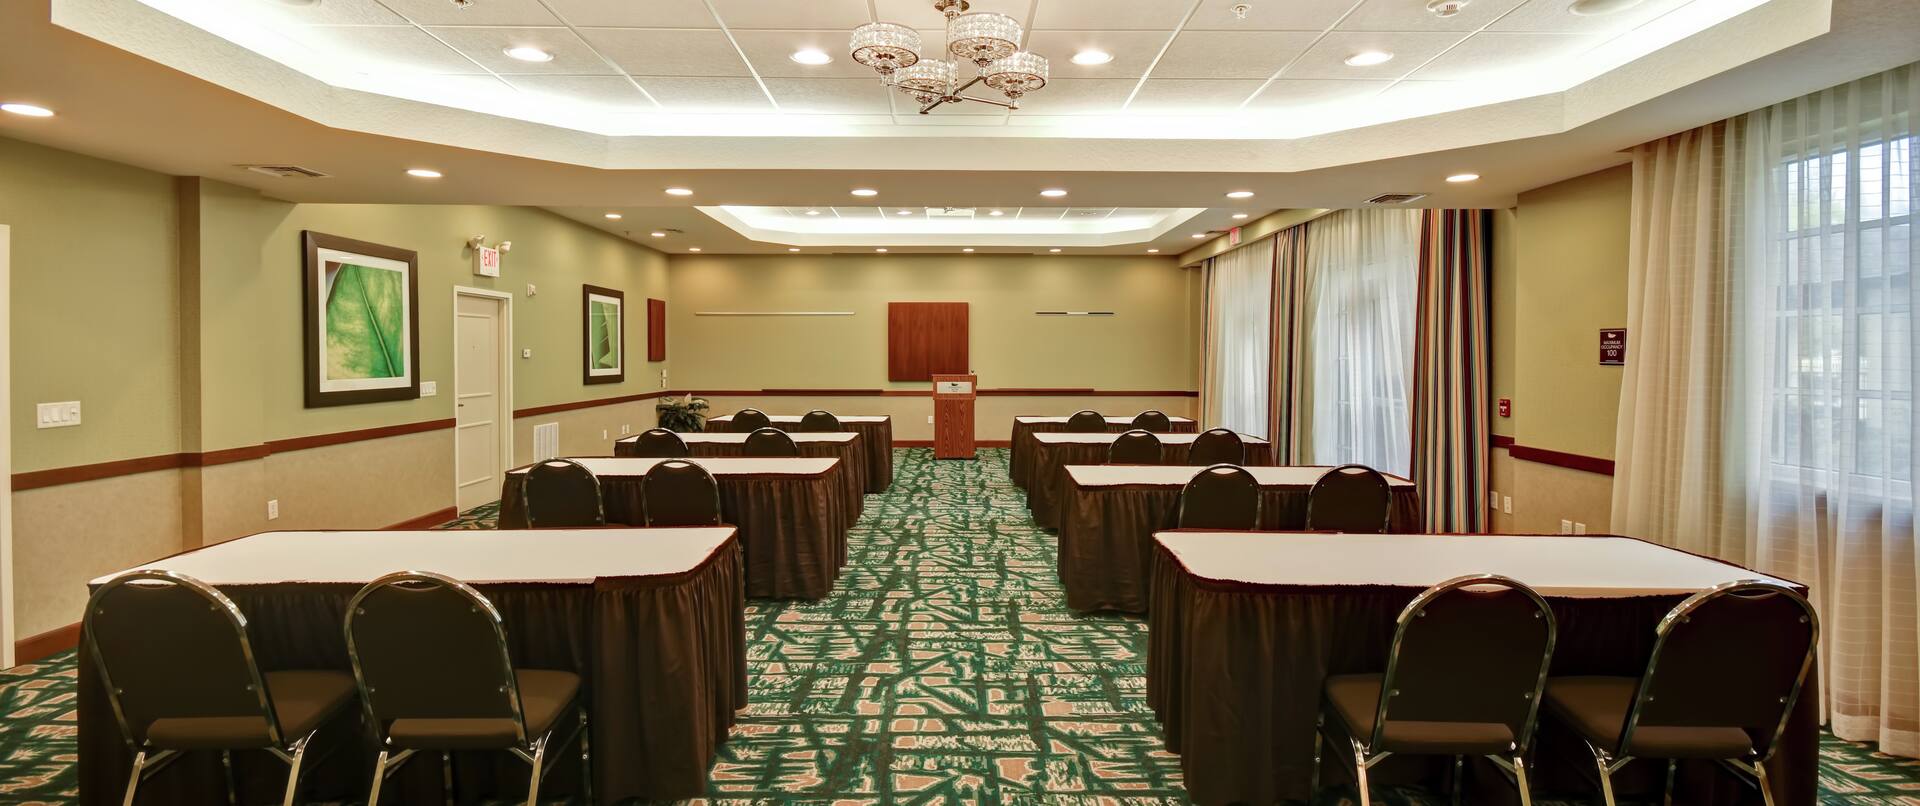 Caladesi Meeting Room with Classroom Seating